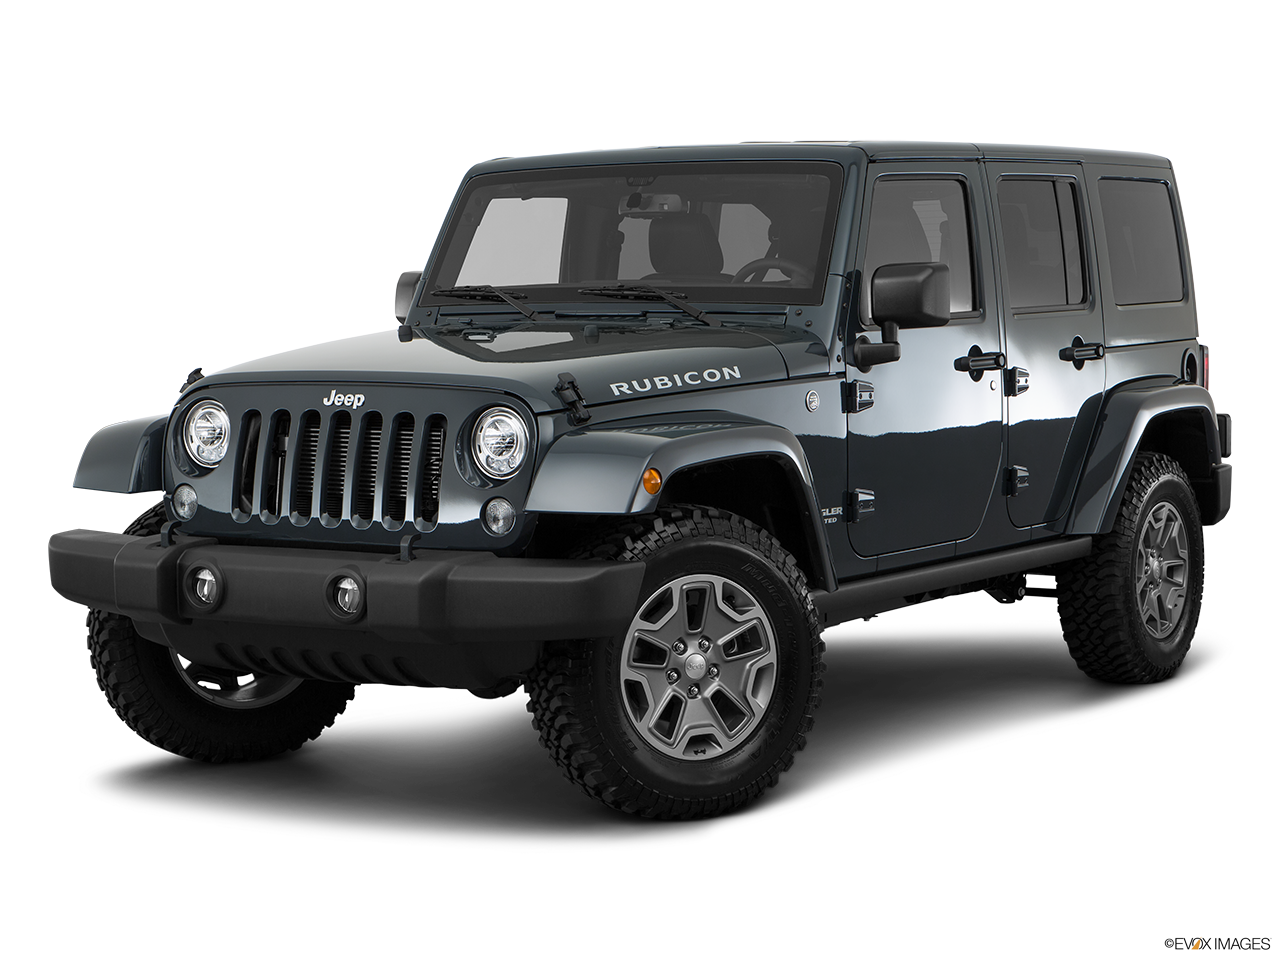 2017 Jeep Wrangler Sahara